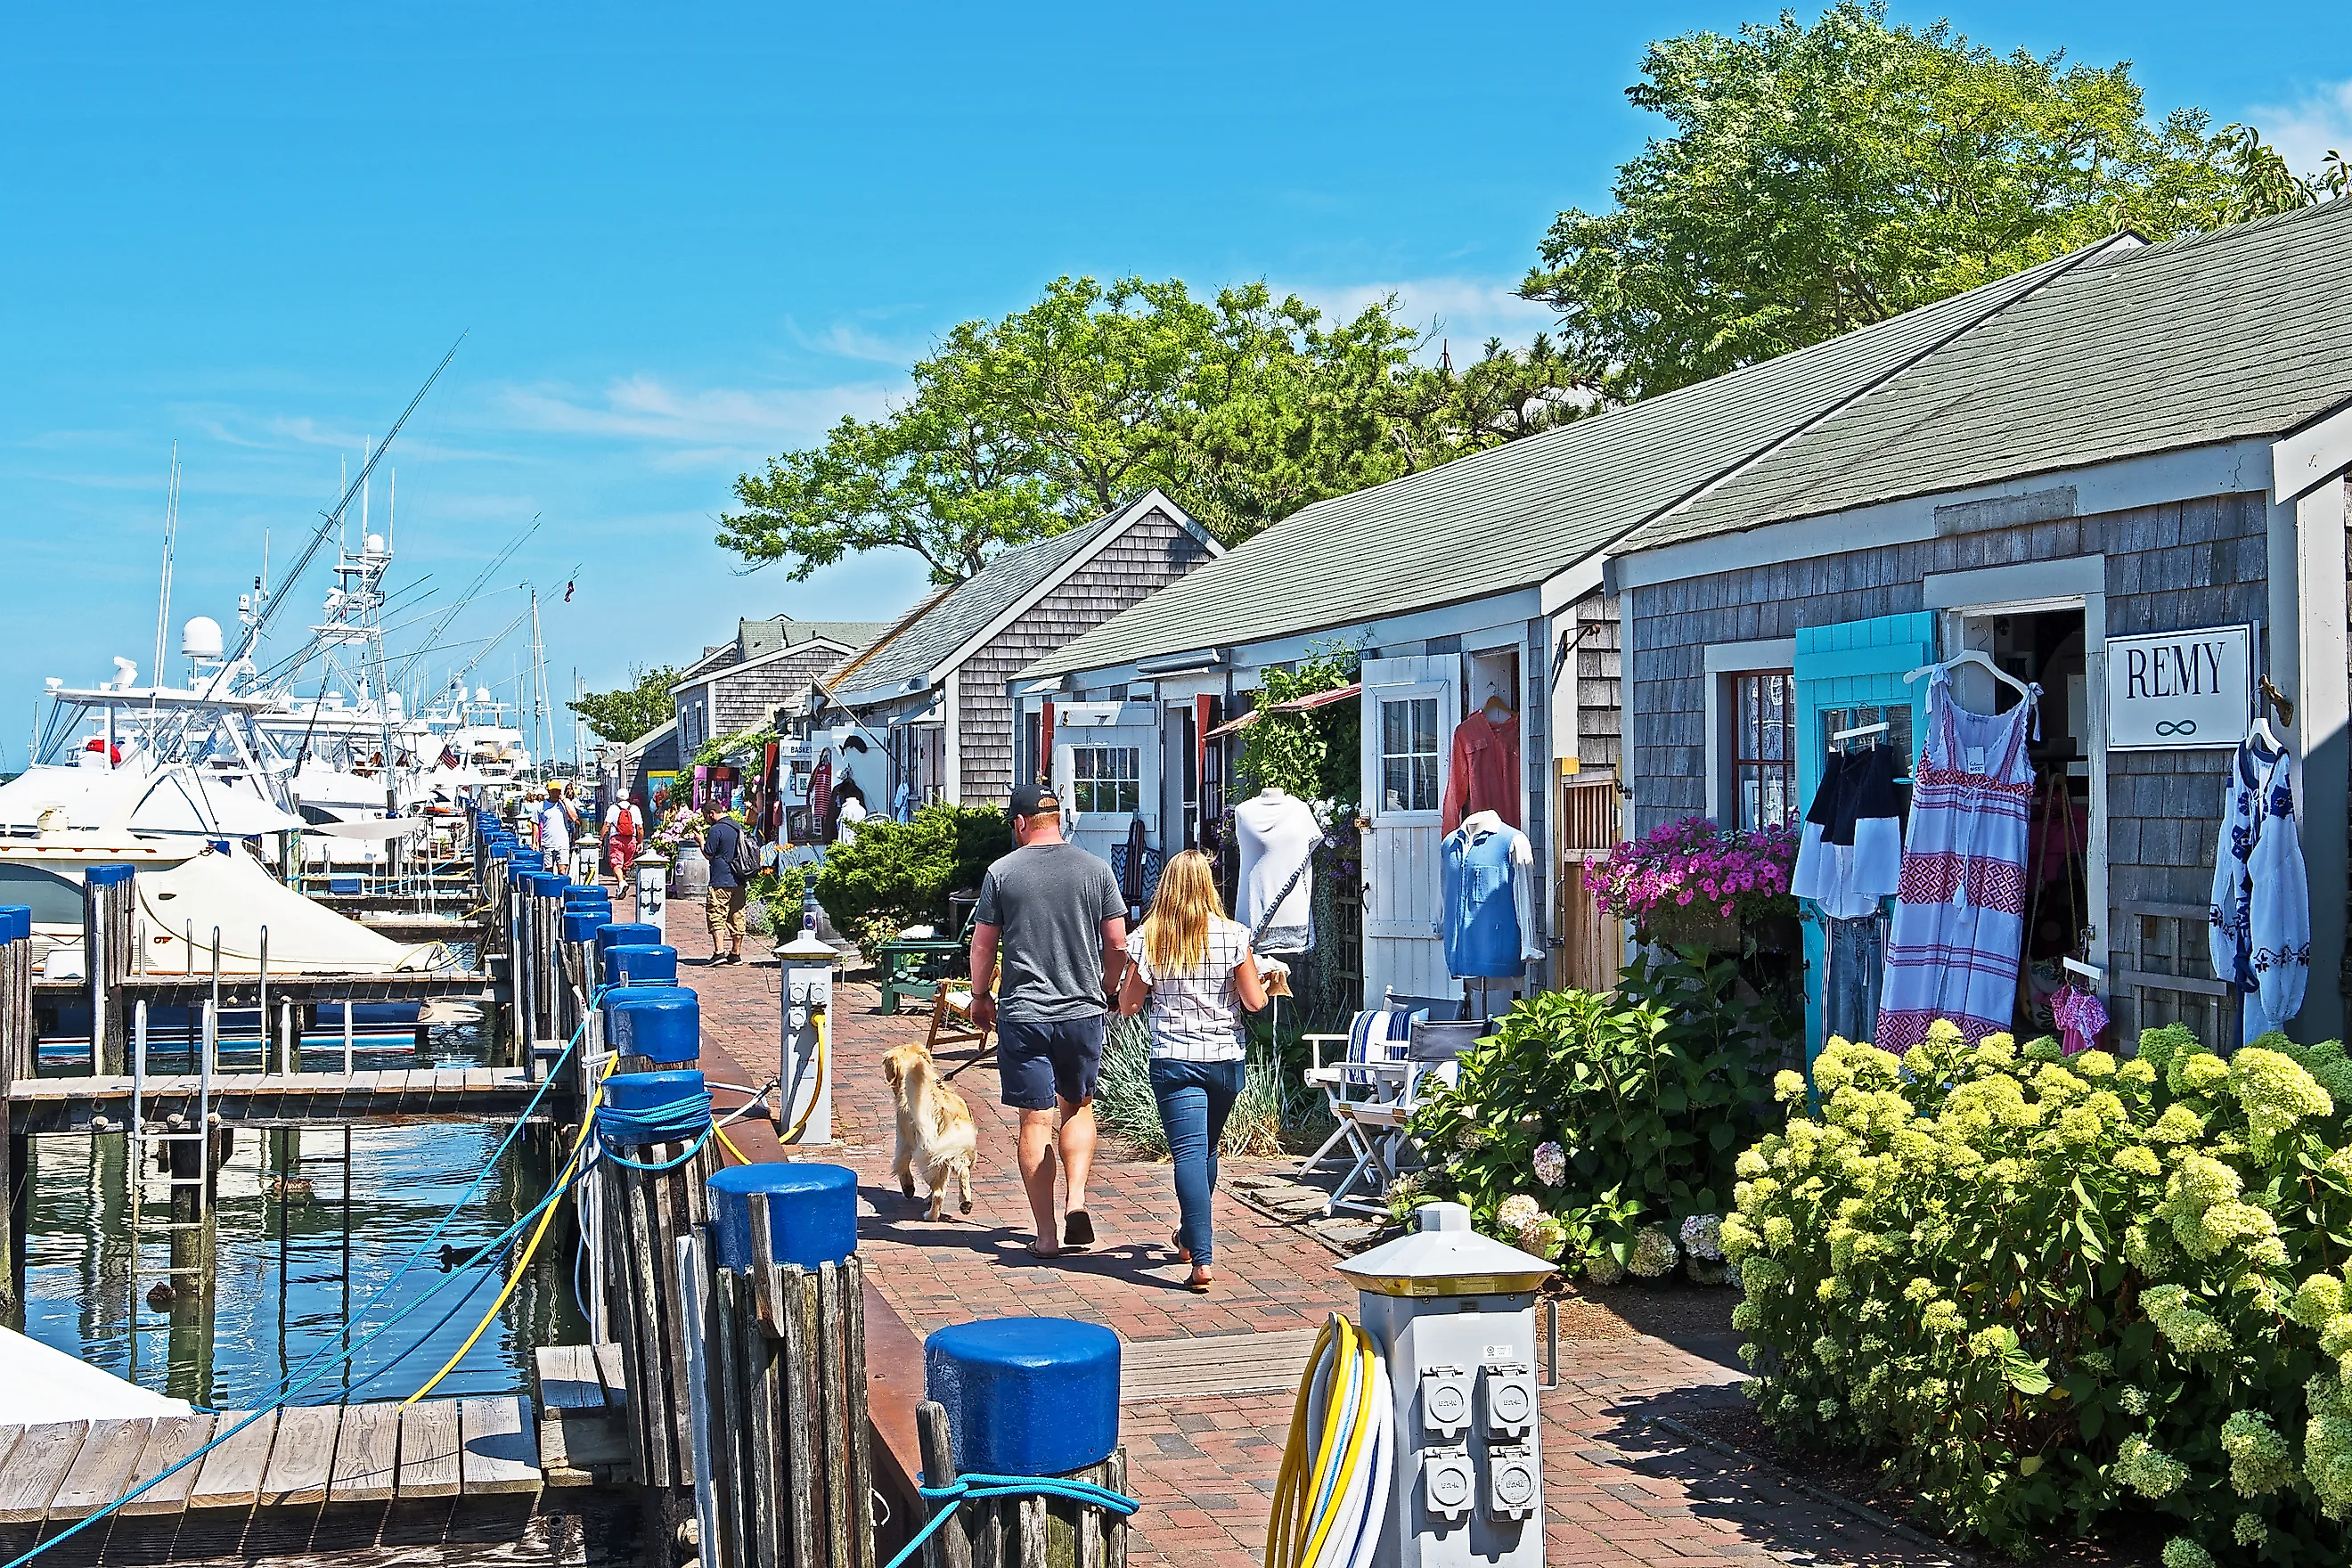 The harbor in Nantucket, Massachusetts. Editorial credit: Mystic Stock Photography / Shutterstock.com.